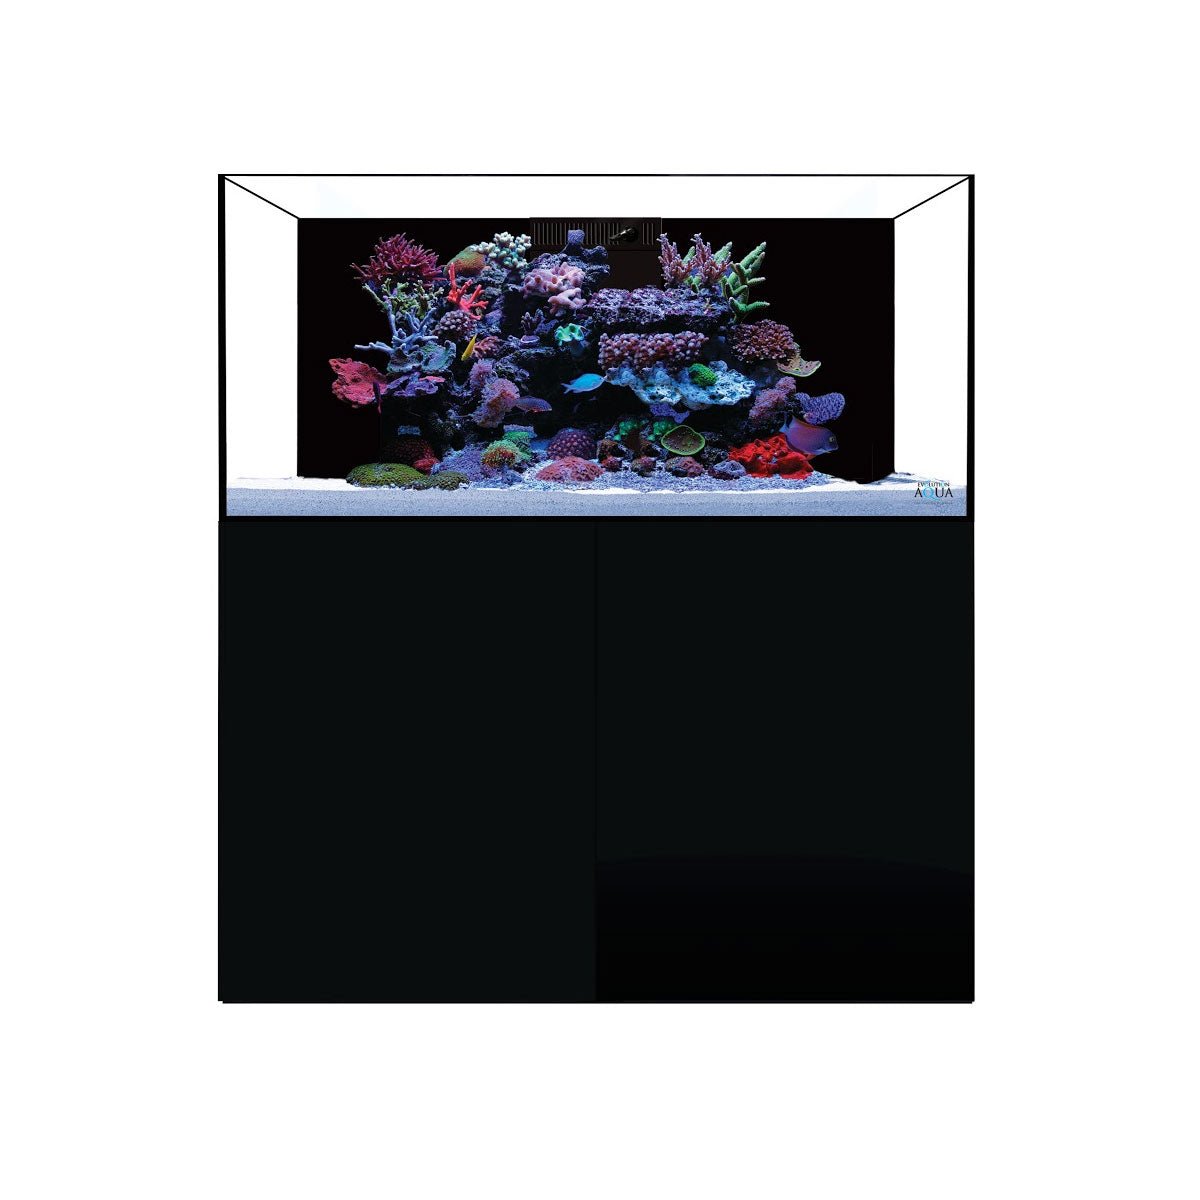 D-D Aqua-Pro Reef 1200 - Japanese Pear Gloss - AquaFrame Cabinet - Charterhouse Aquatics